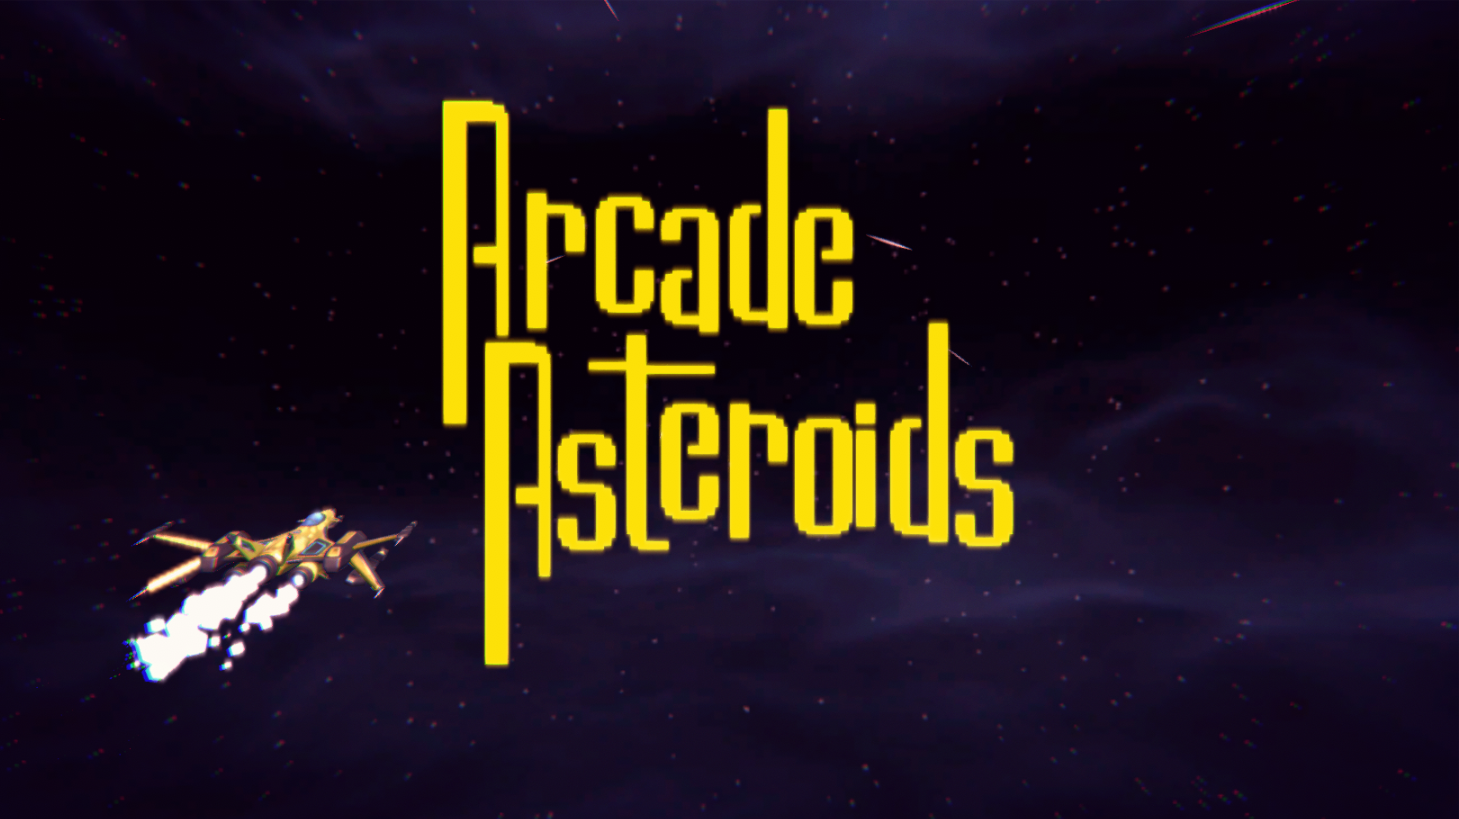 Arcade Asteroids